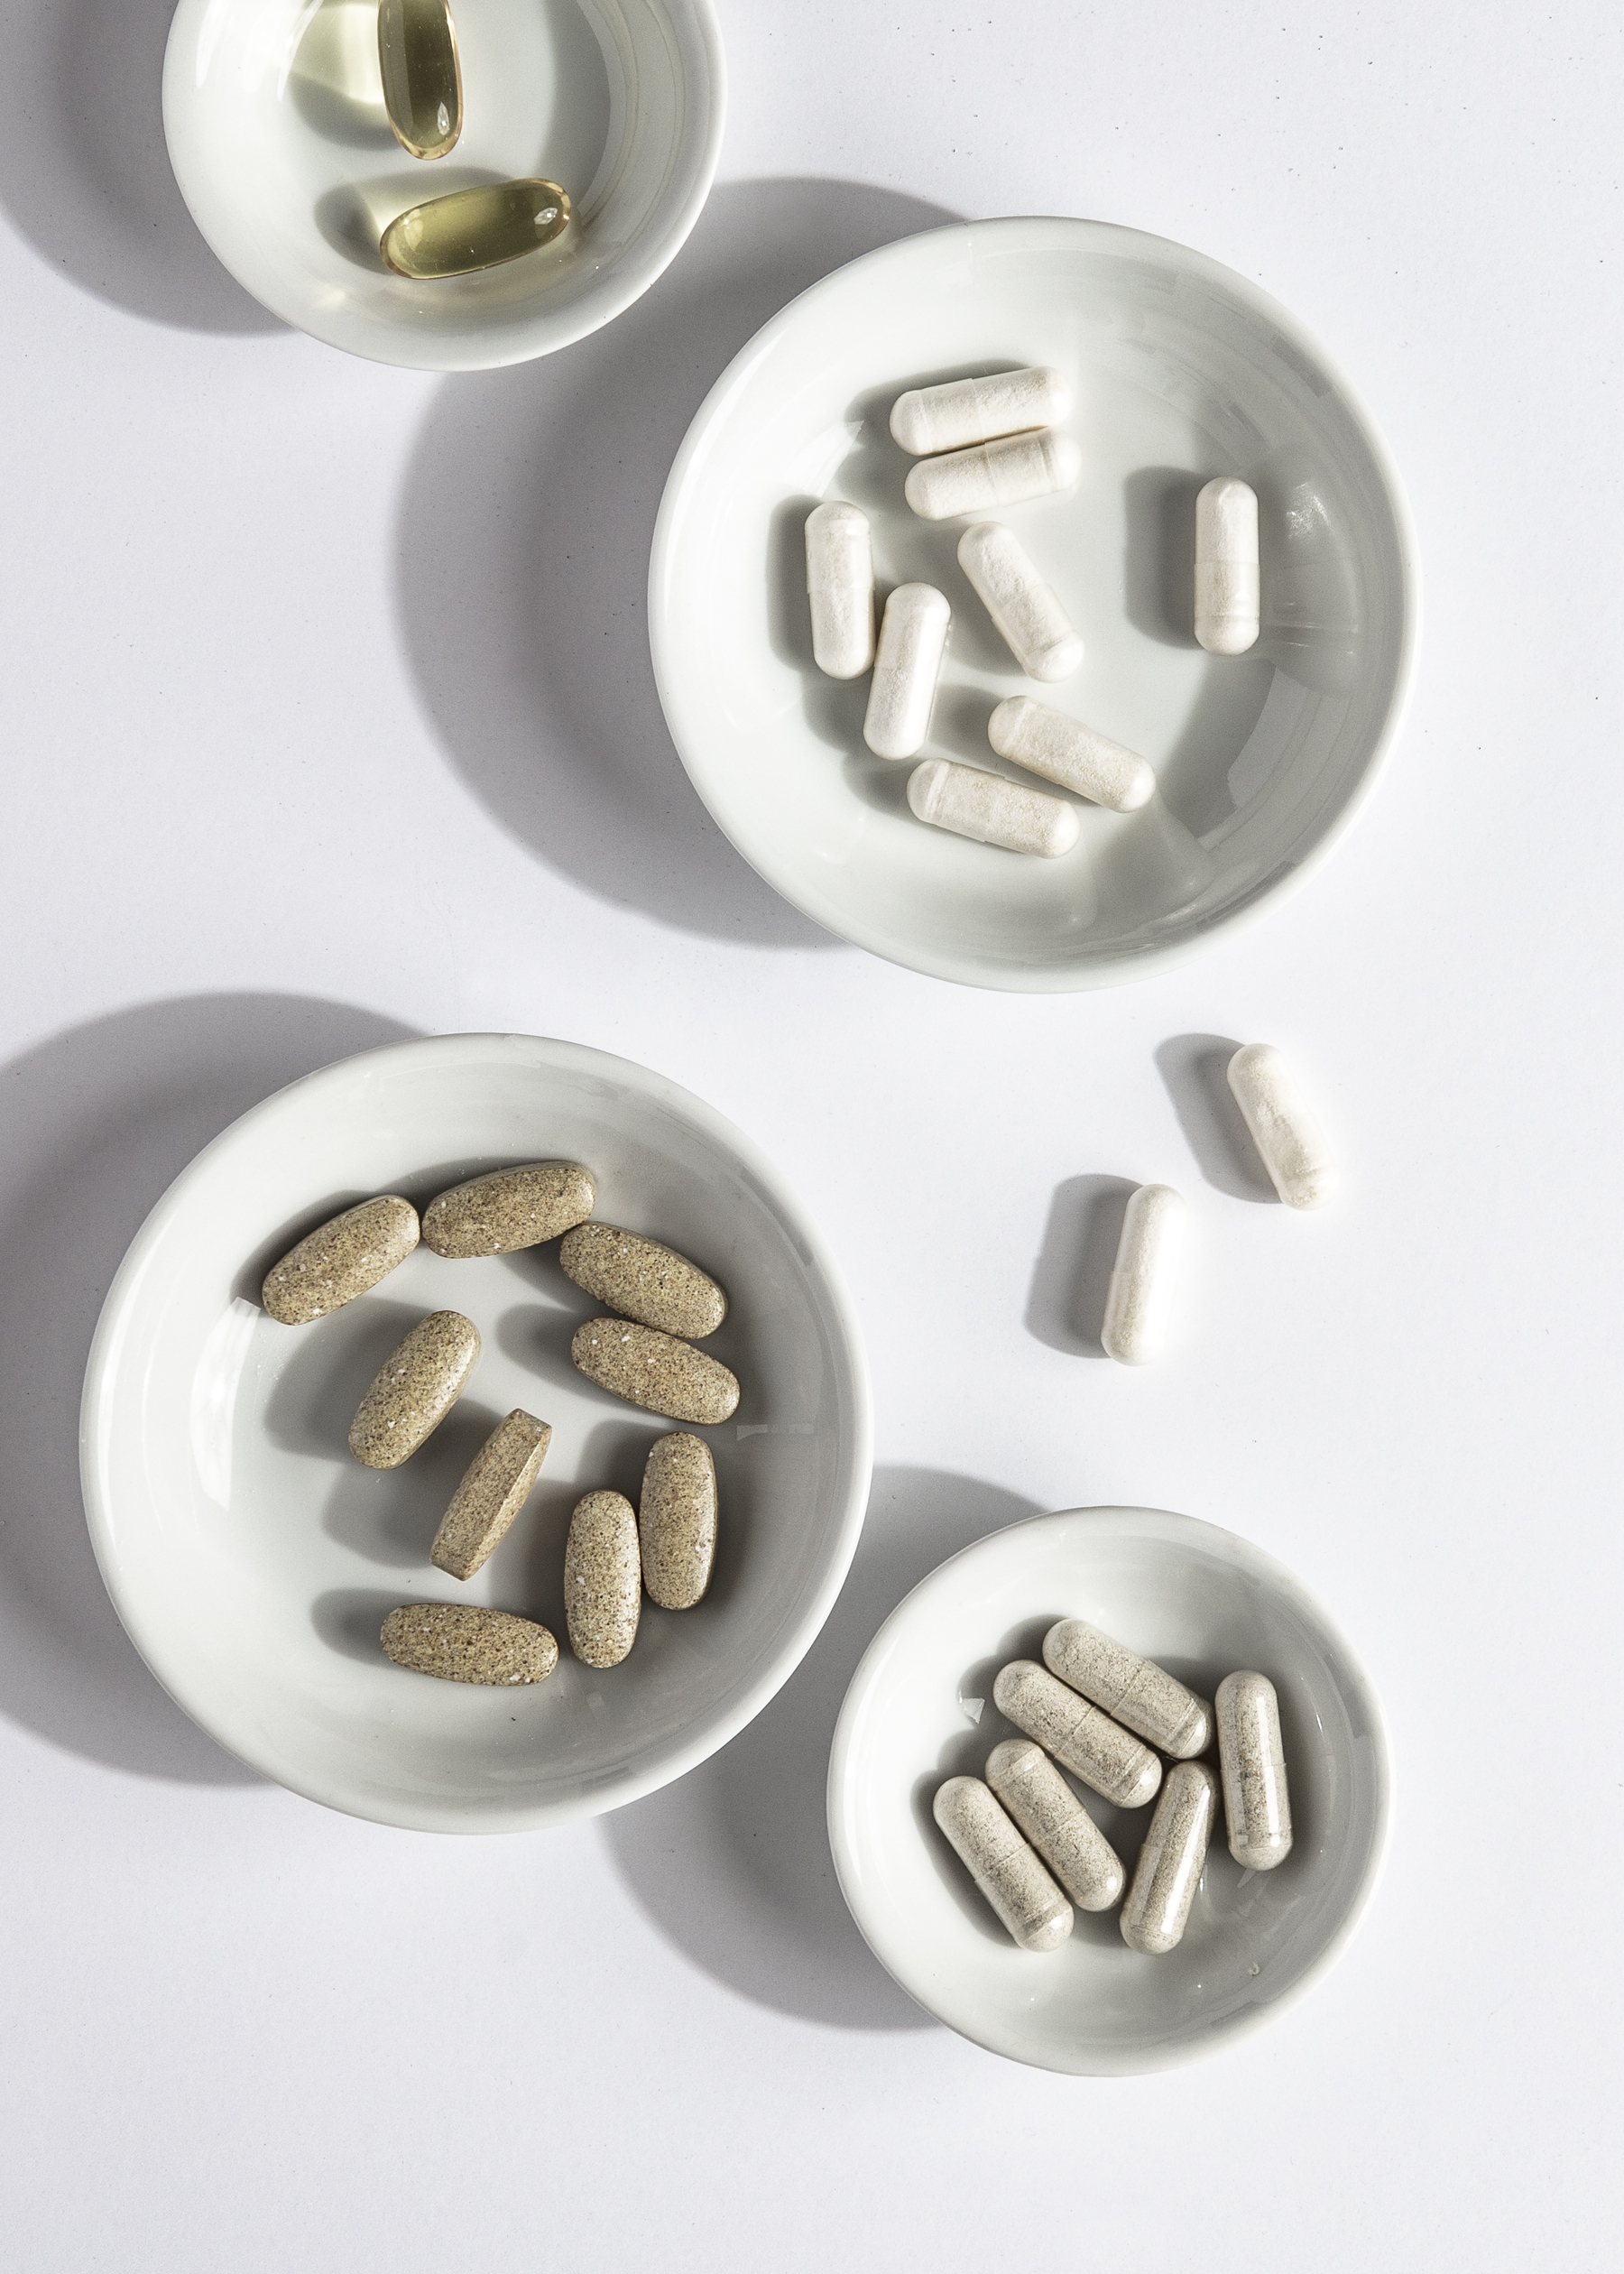 Vitamin supplements in bowls